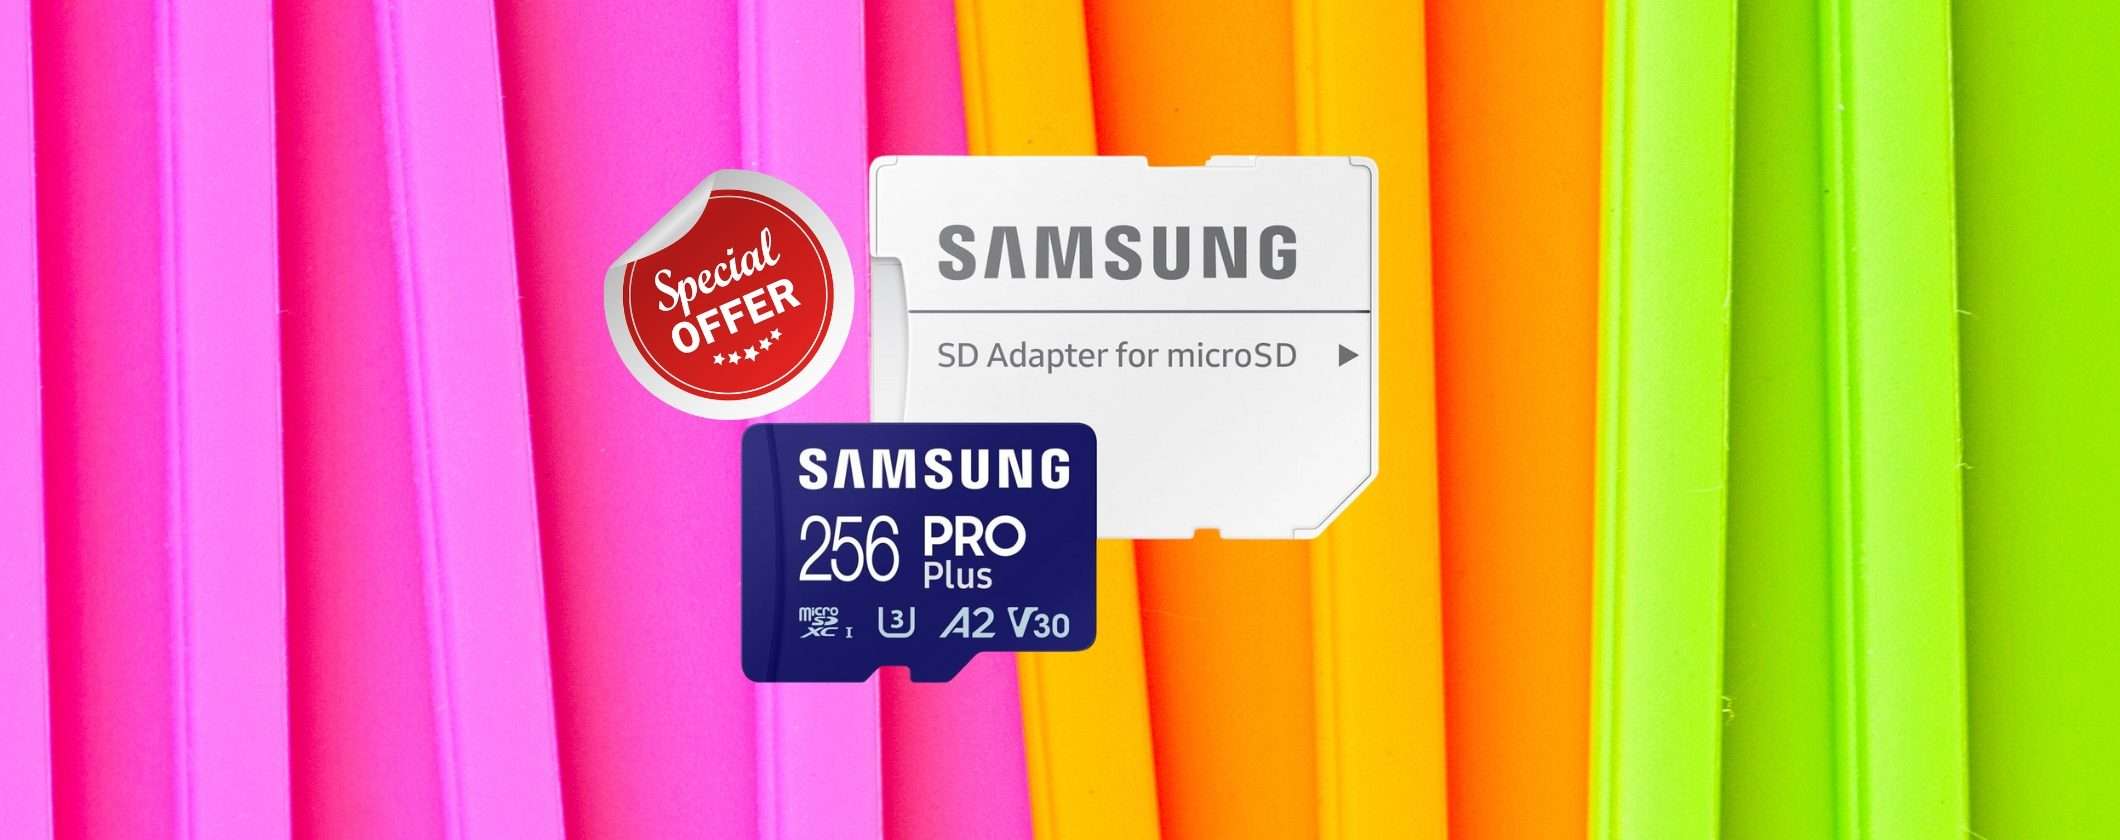 MicroSD Samsung 256GB: OFFERTA BOMBA su Amazon